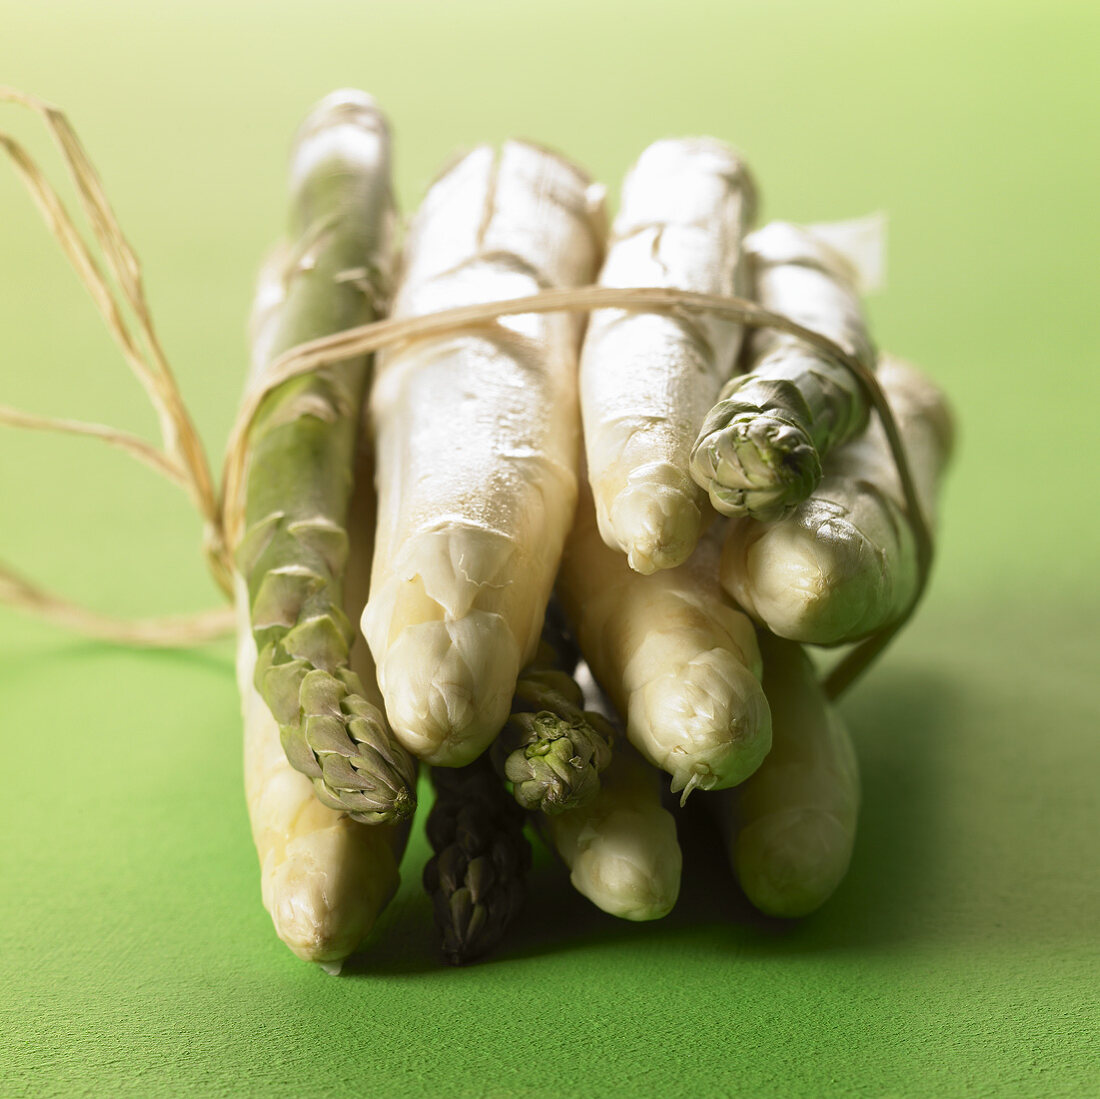 White and green asparagus, a bundle